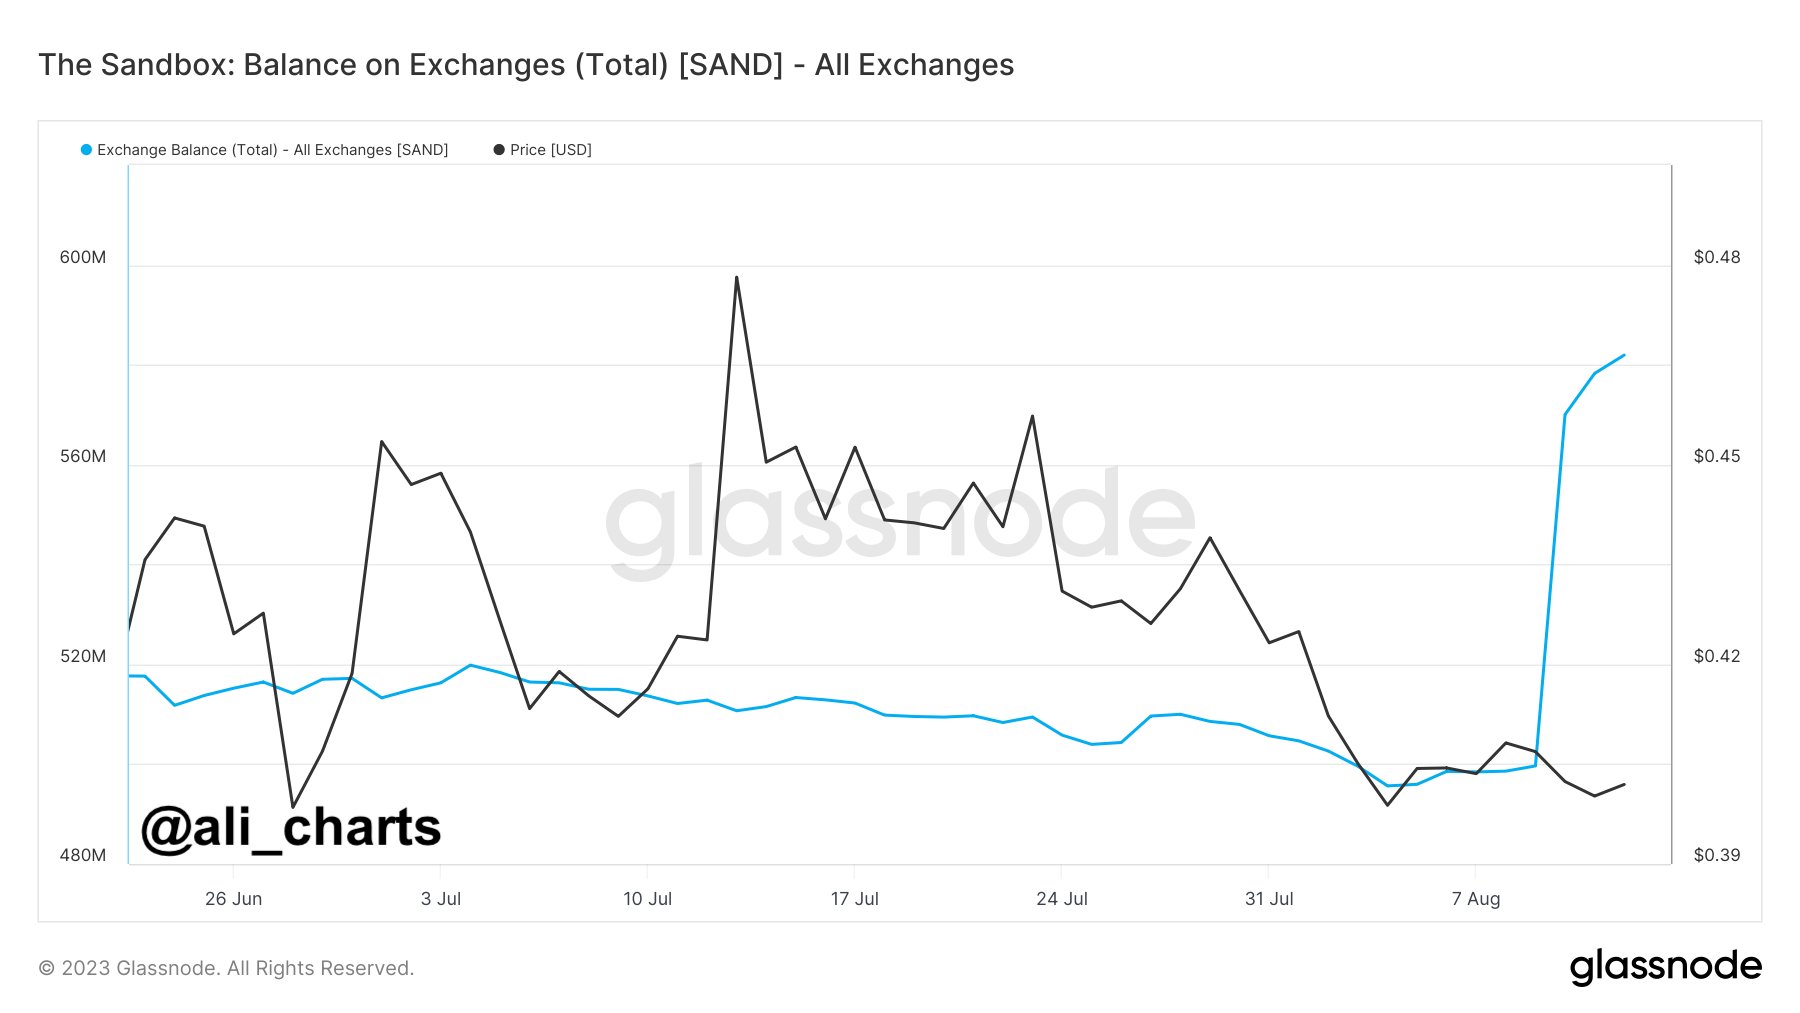 SAND balance on exchanges